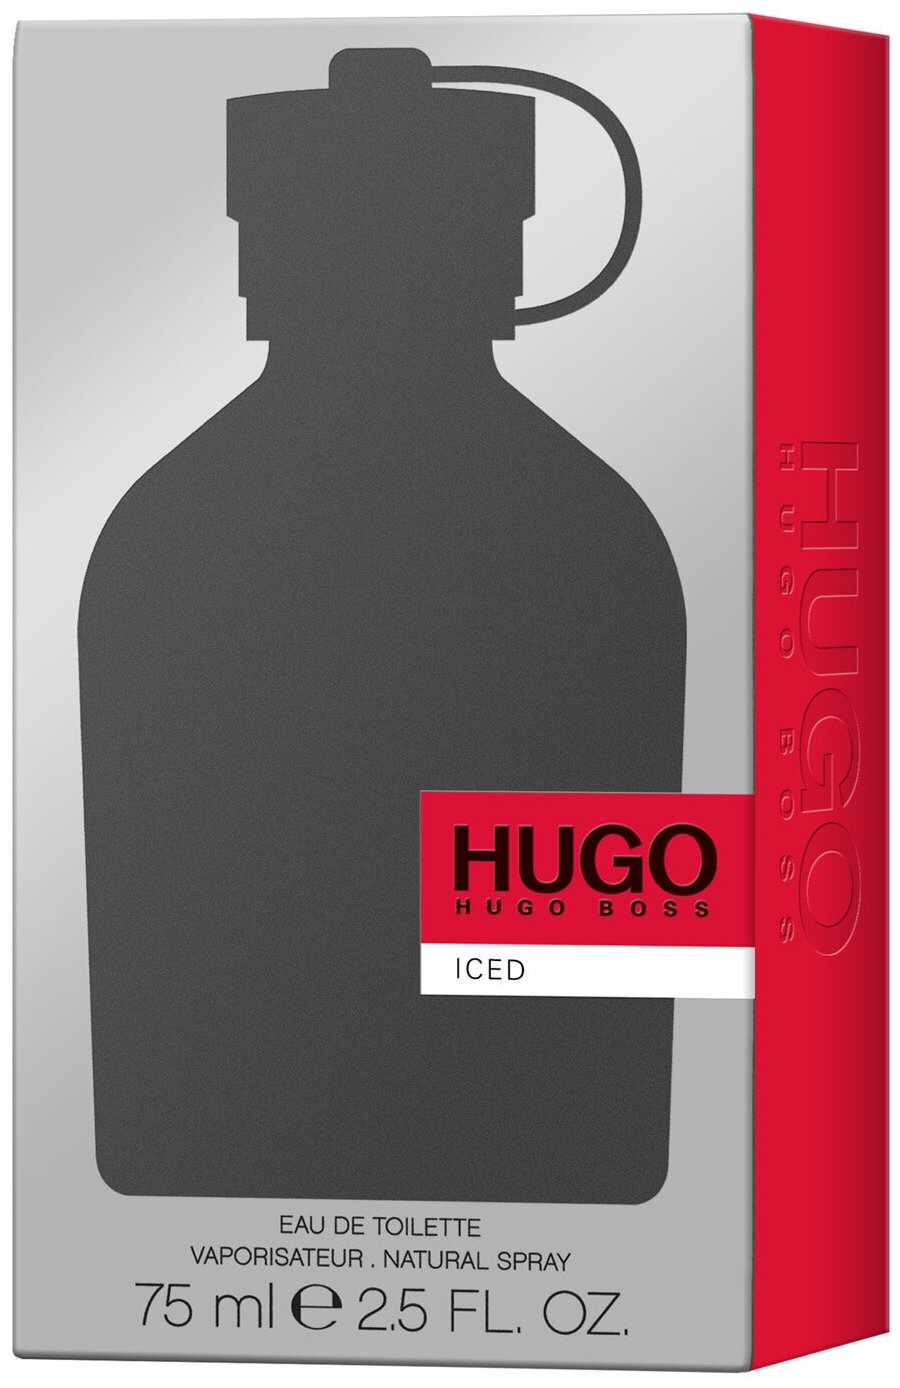 iced hugo boss